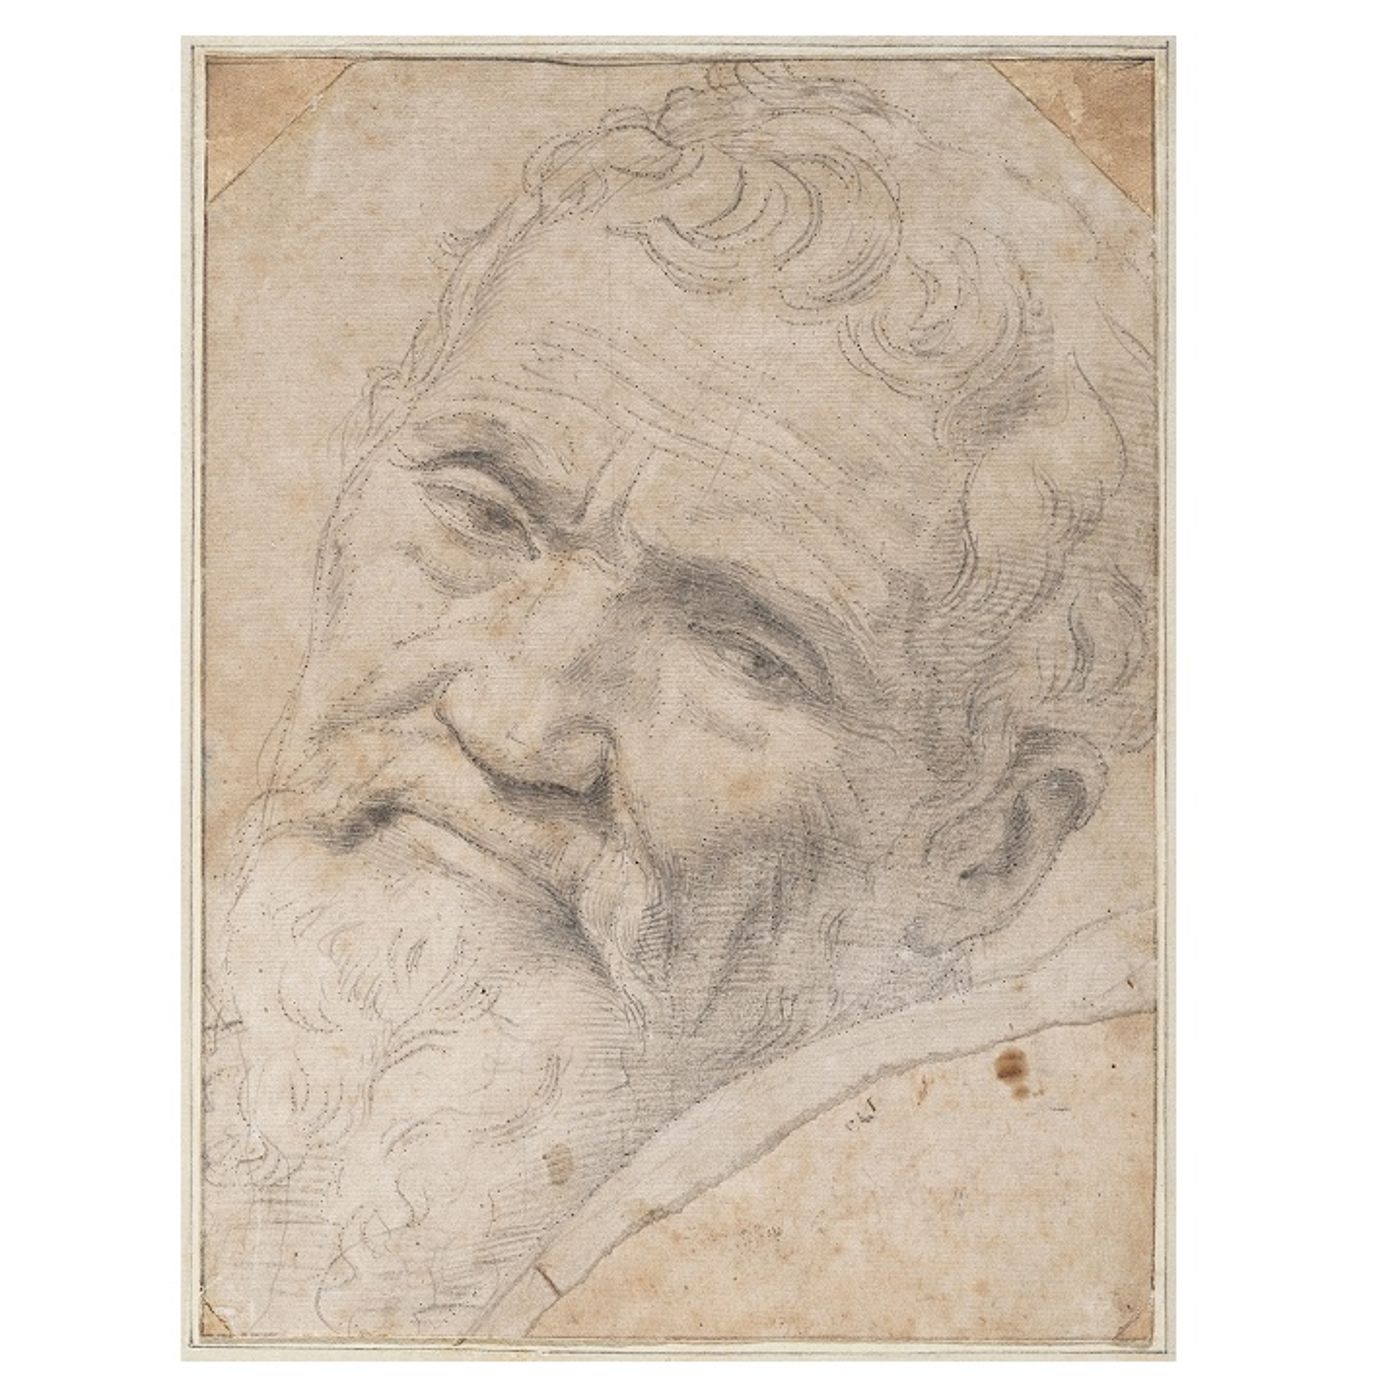 Michelangelo (Parte I)